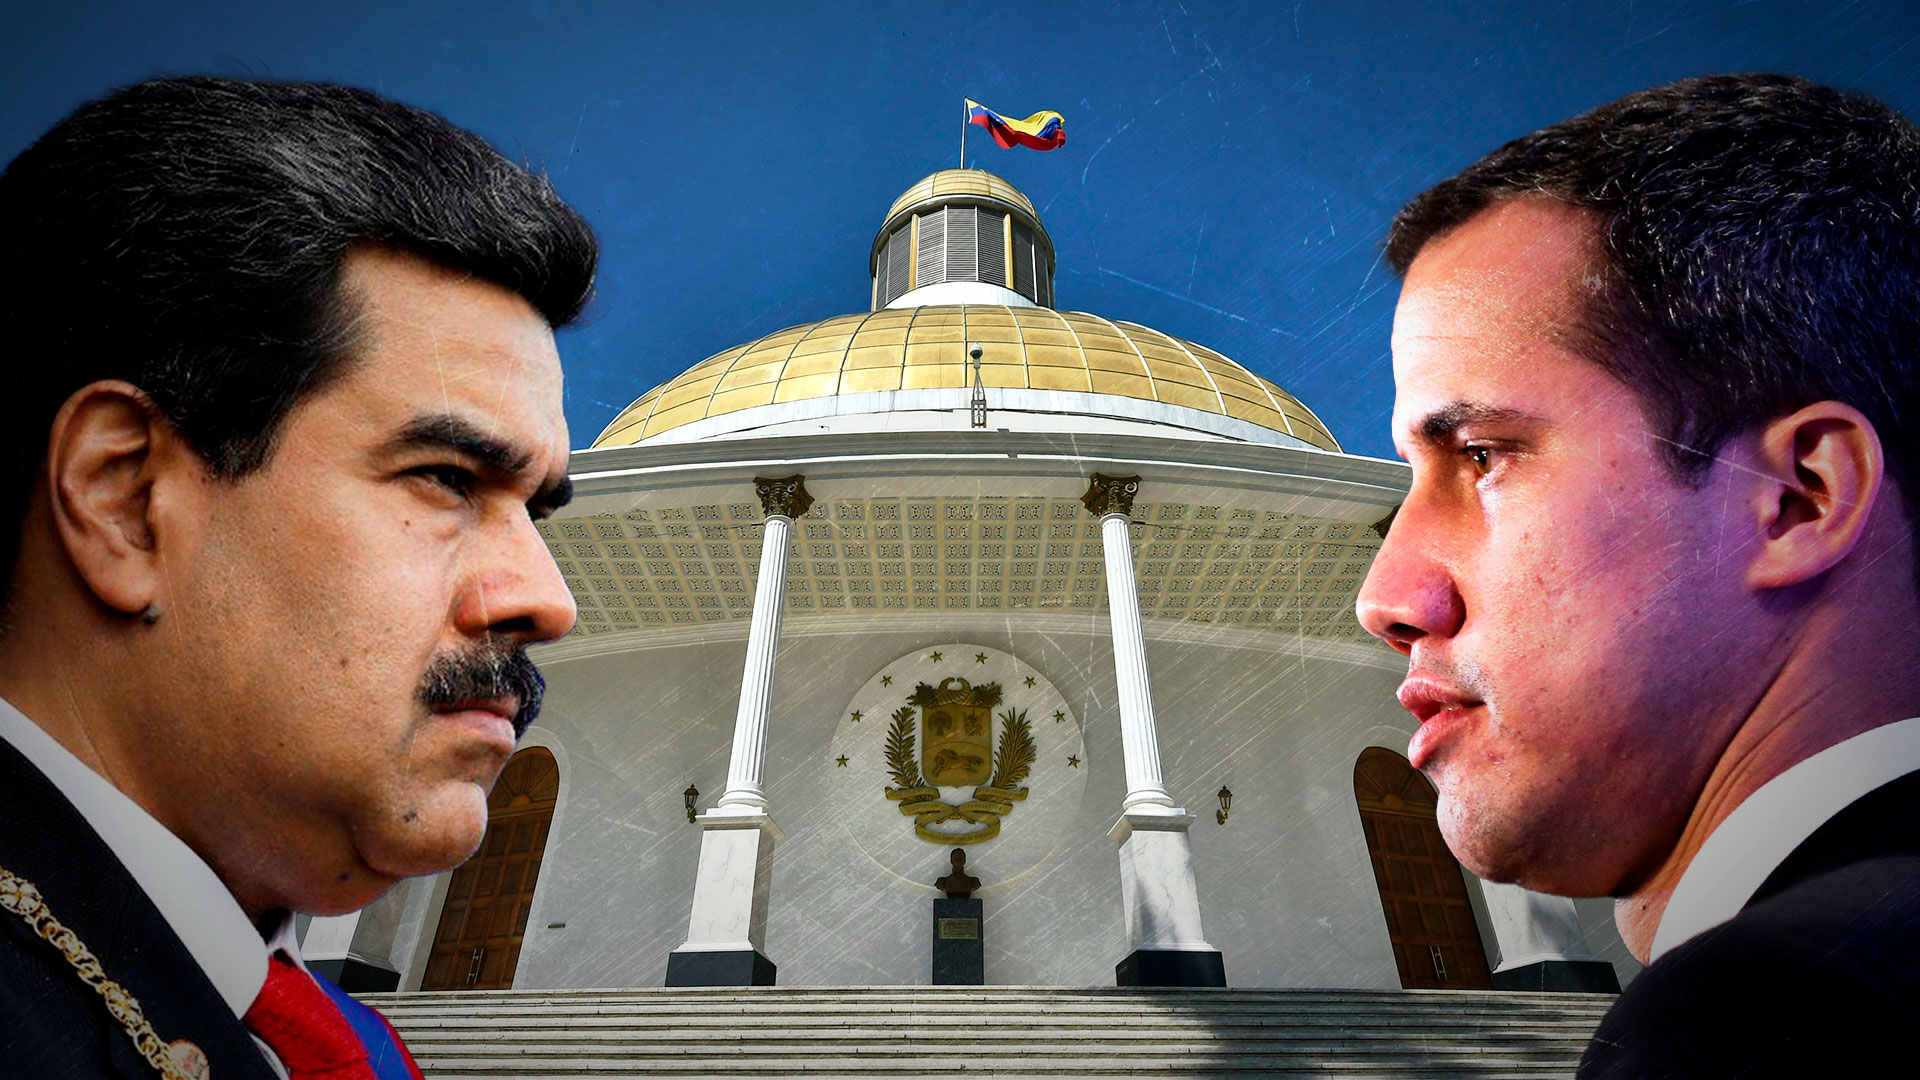 El dictador Nicolás Maduro busca arrebatar el poder de la Asamblea Nacional (AN) al presidente Juan Guaidó